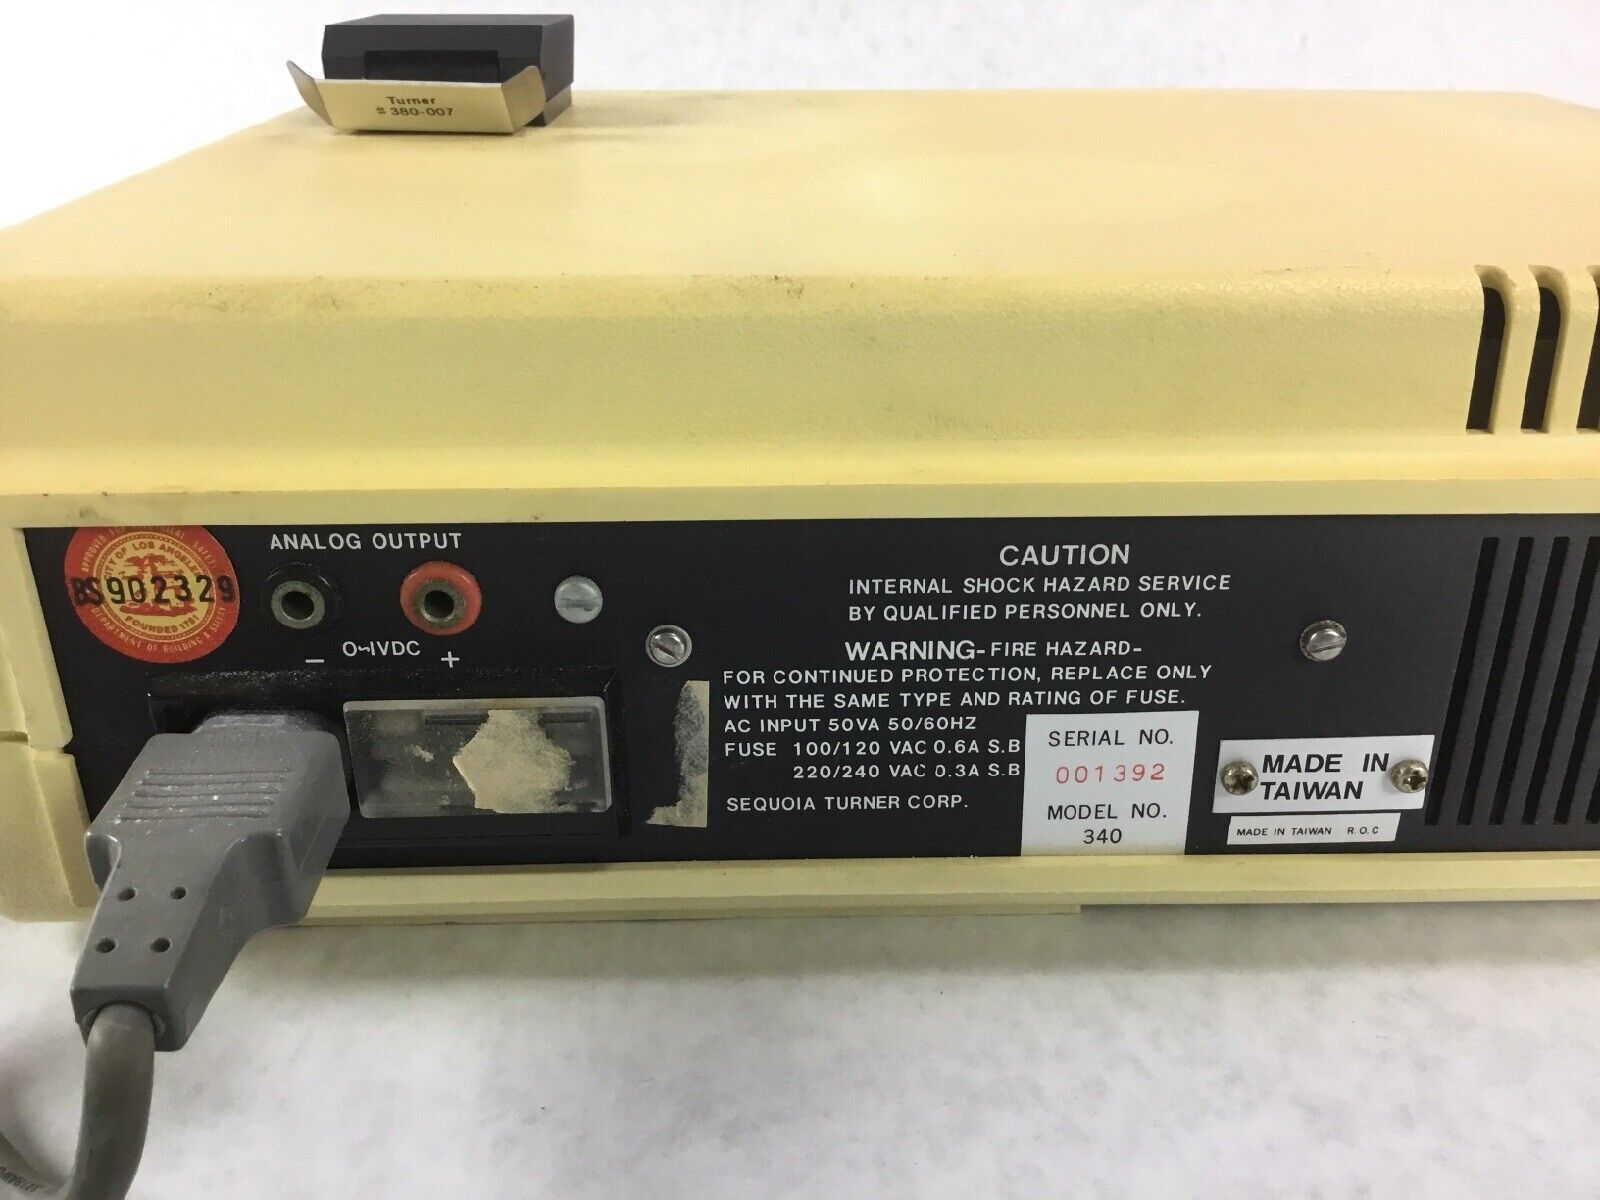 Sequoia-Turner Model 340 Spectrophotometer